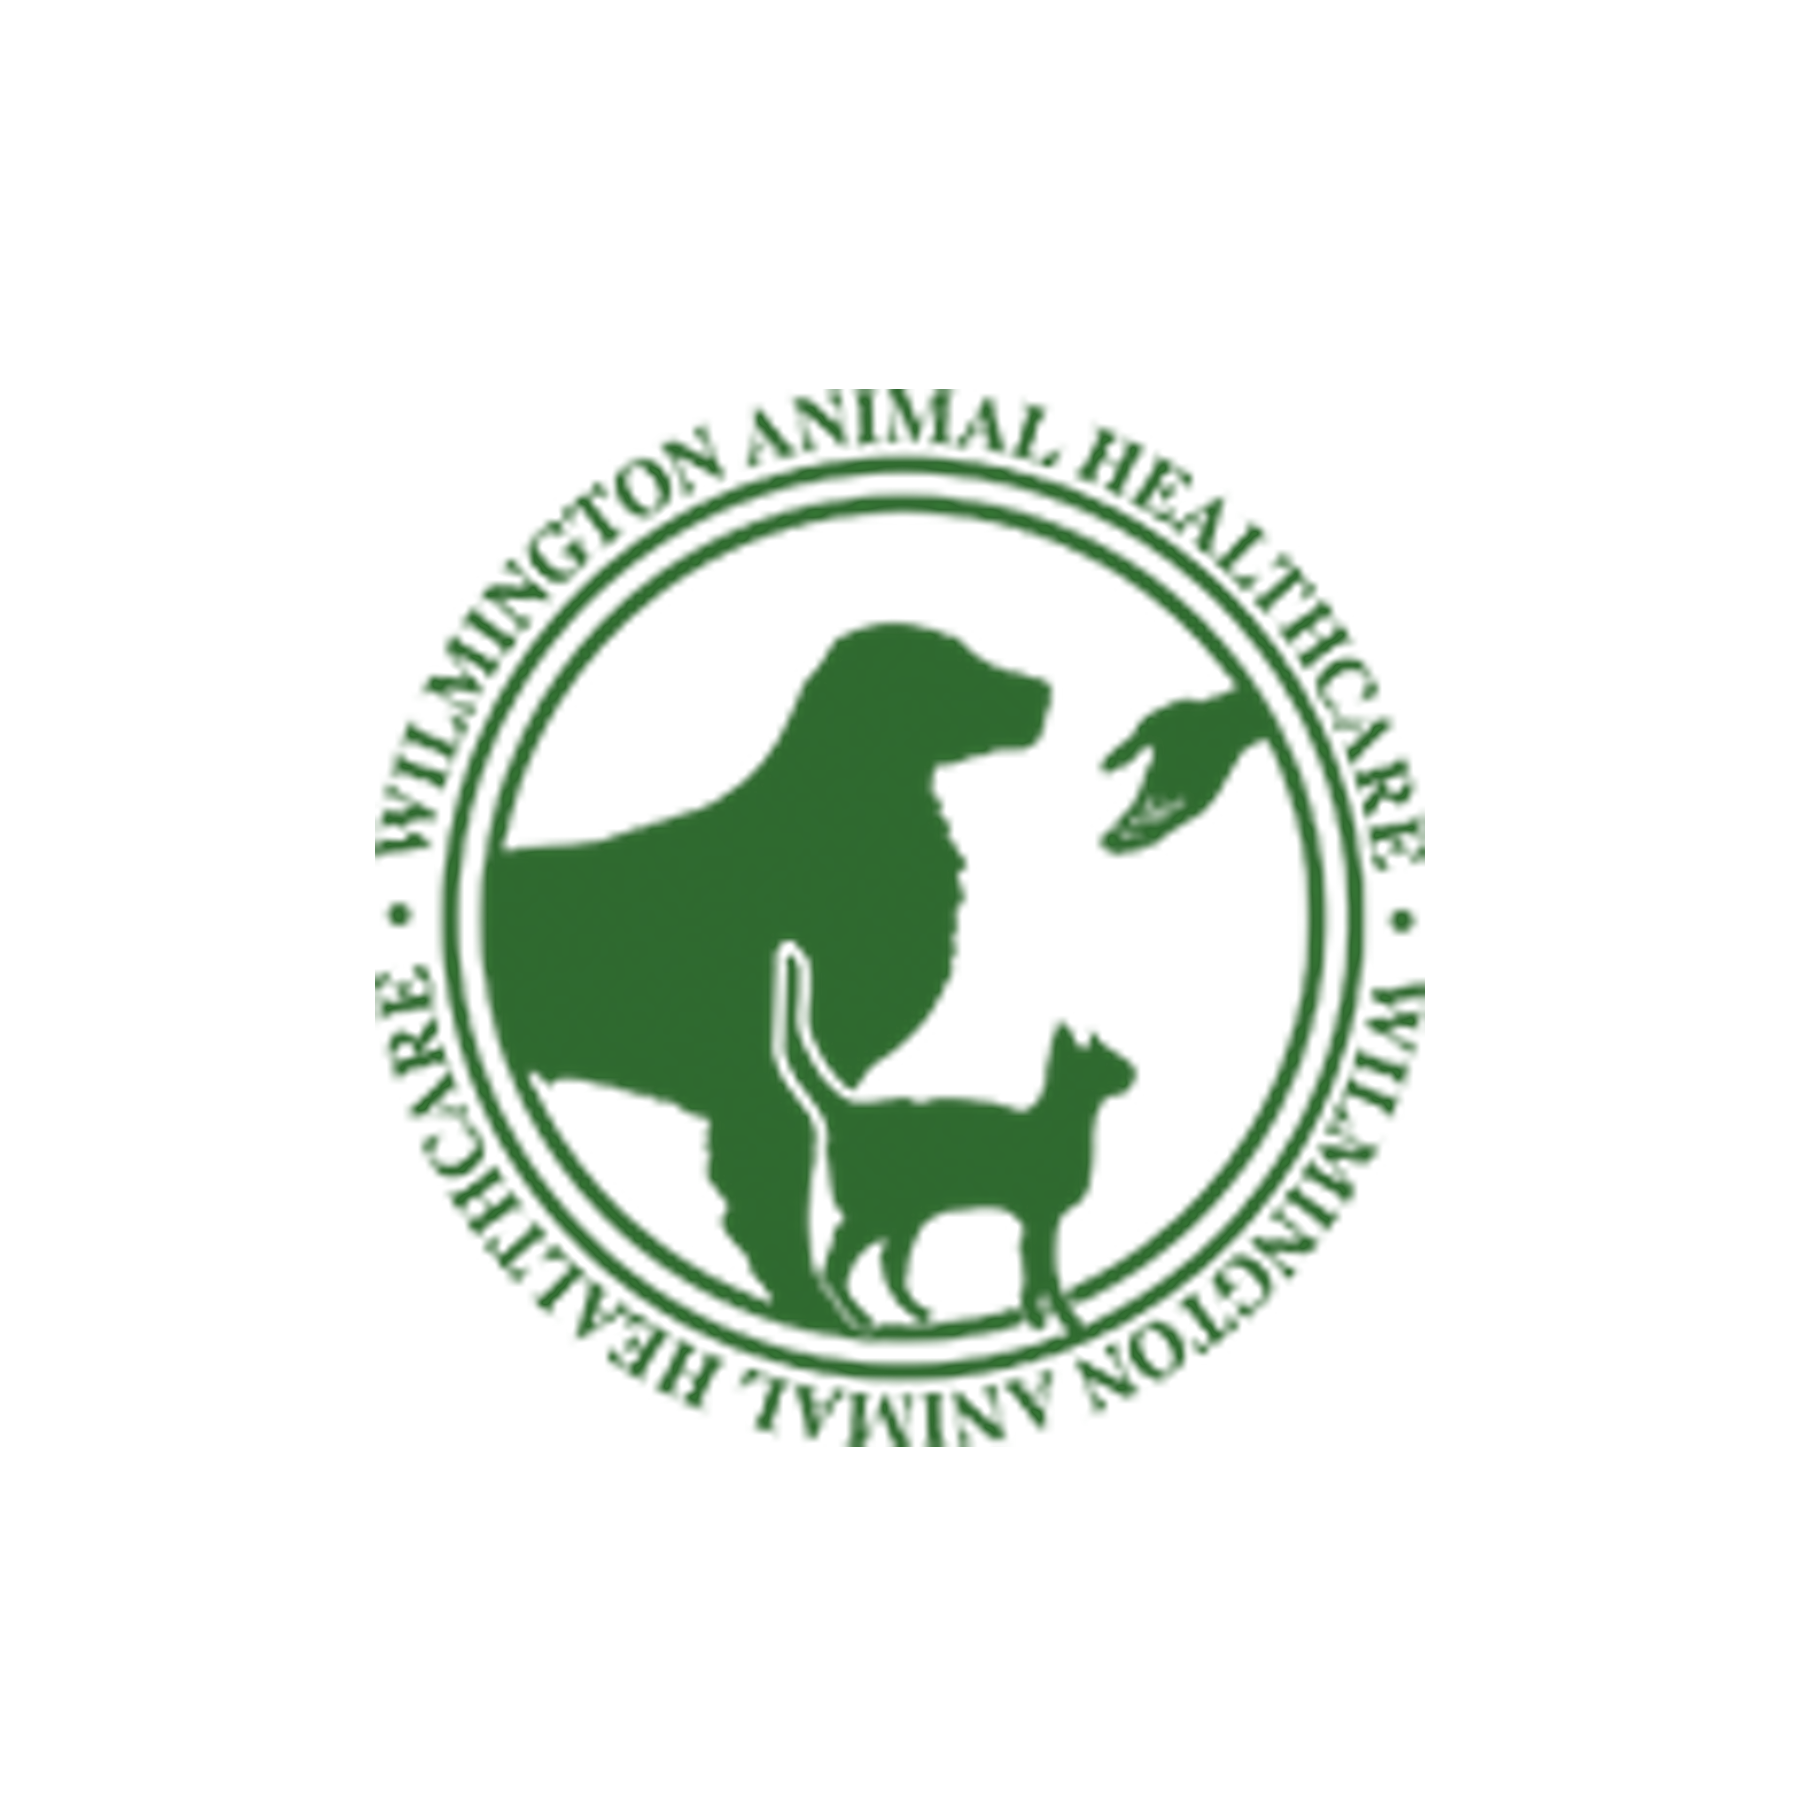 Wilmington Animal Healthcare Veterinary Hospital - Wilmington, NC 28411 - (910)791-7101 | ShowMeLocal.com